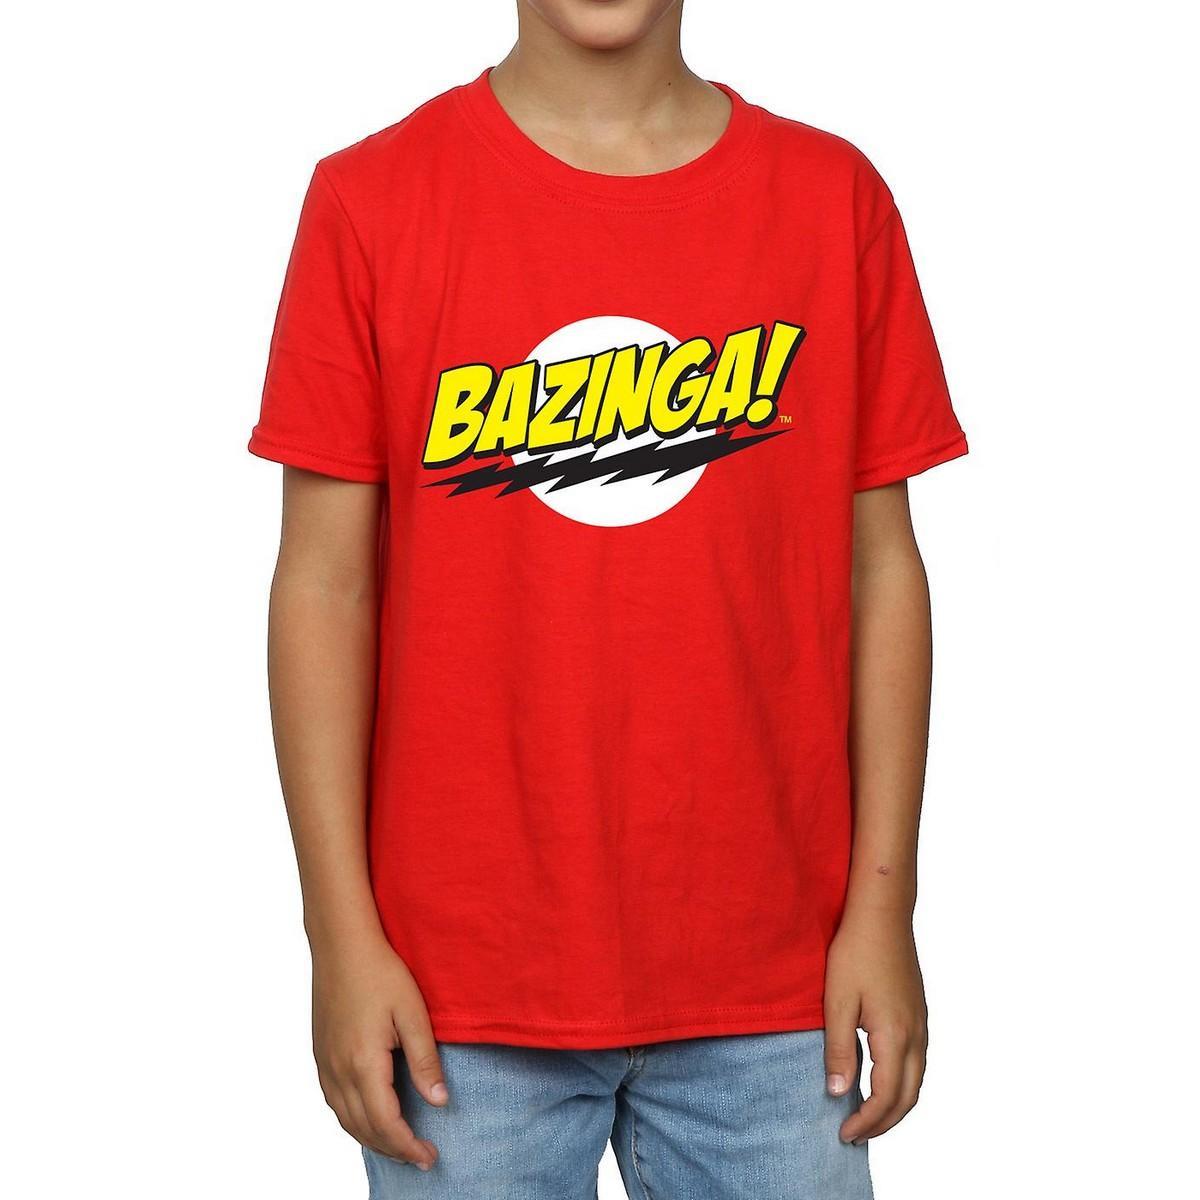 The Big Bang Theory Boys Bazinga Cotton T-Shirt (Red) (9-11 Years)